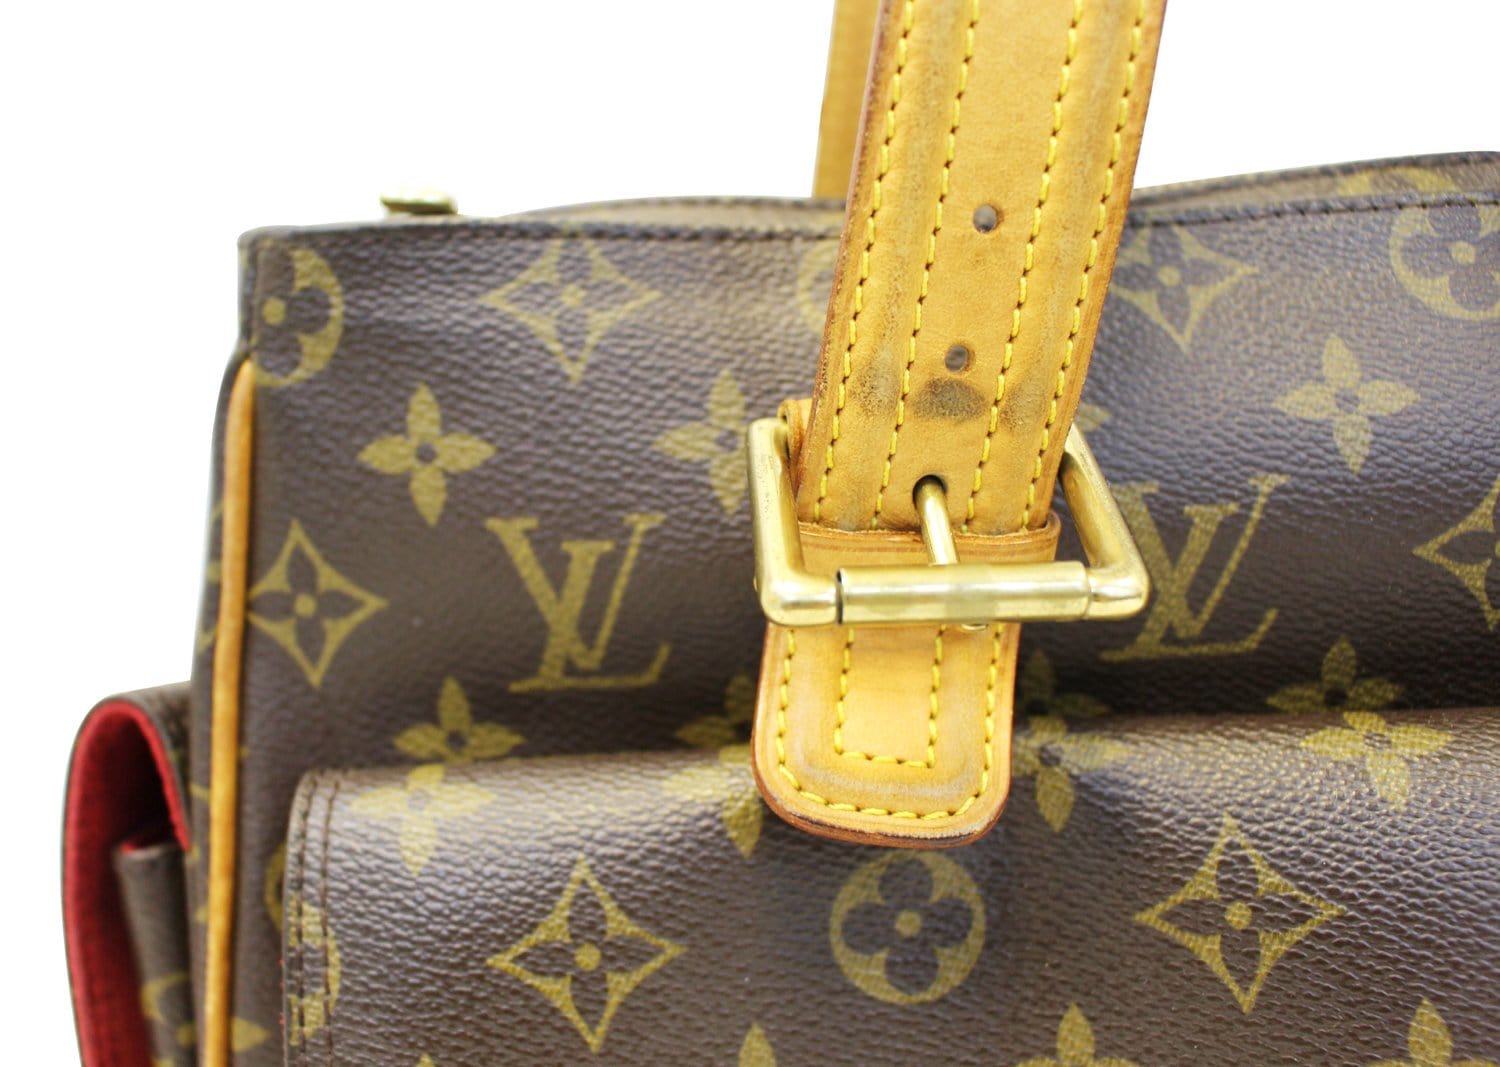 Stark Style - Louis Vuitton Multipli-Cite Bag NOW $399 (Retail